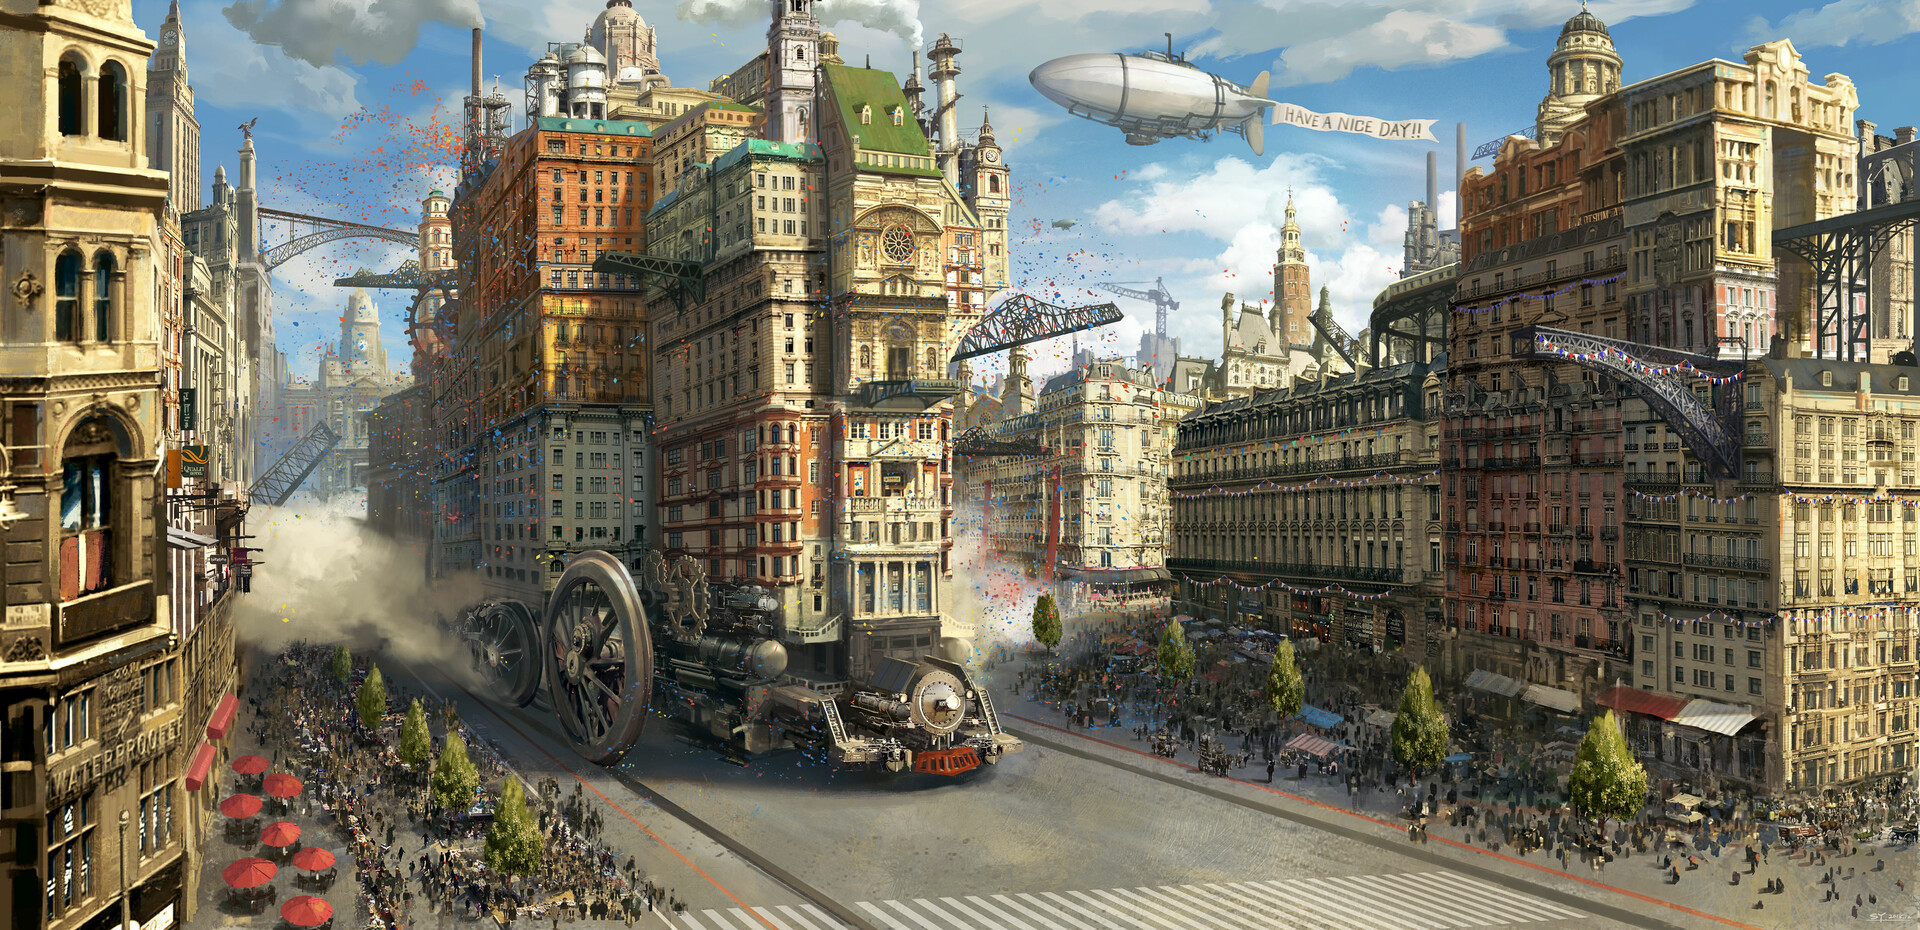 General 1920x930 SY-37 digital art landscape fantasy art steampunk cityscape fantasy city airships